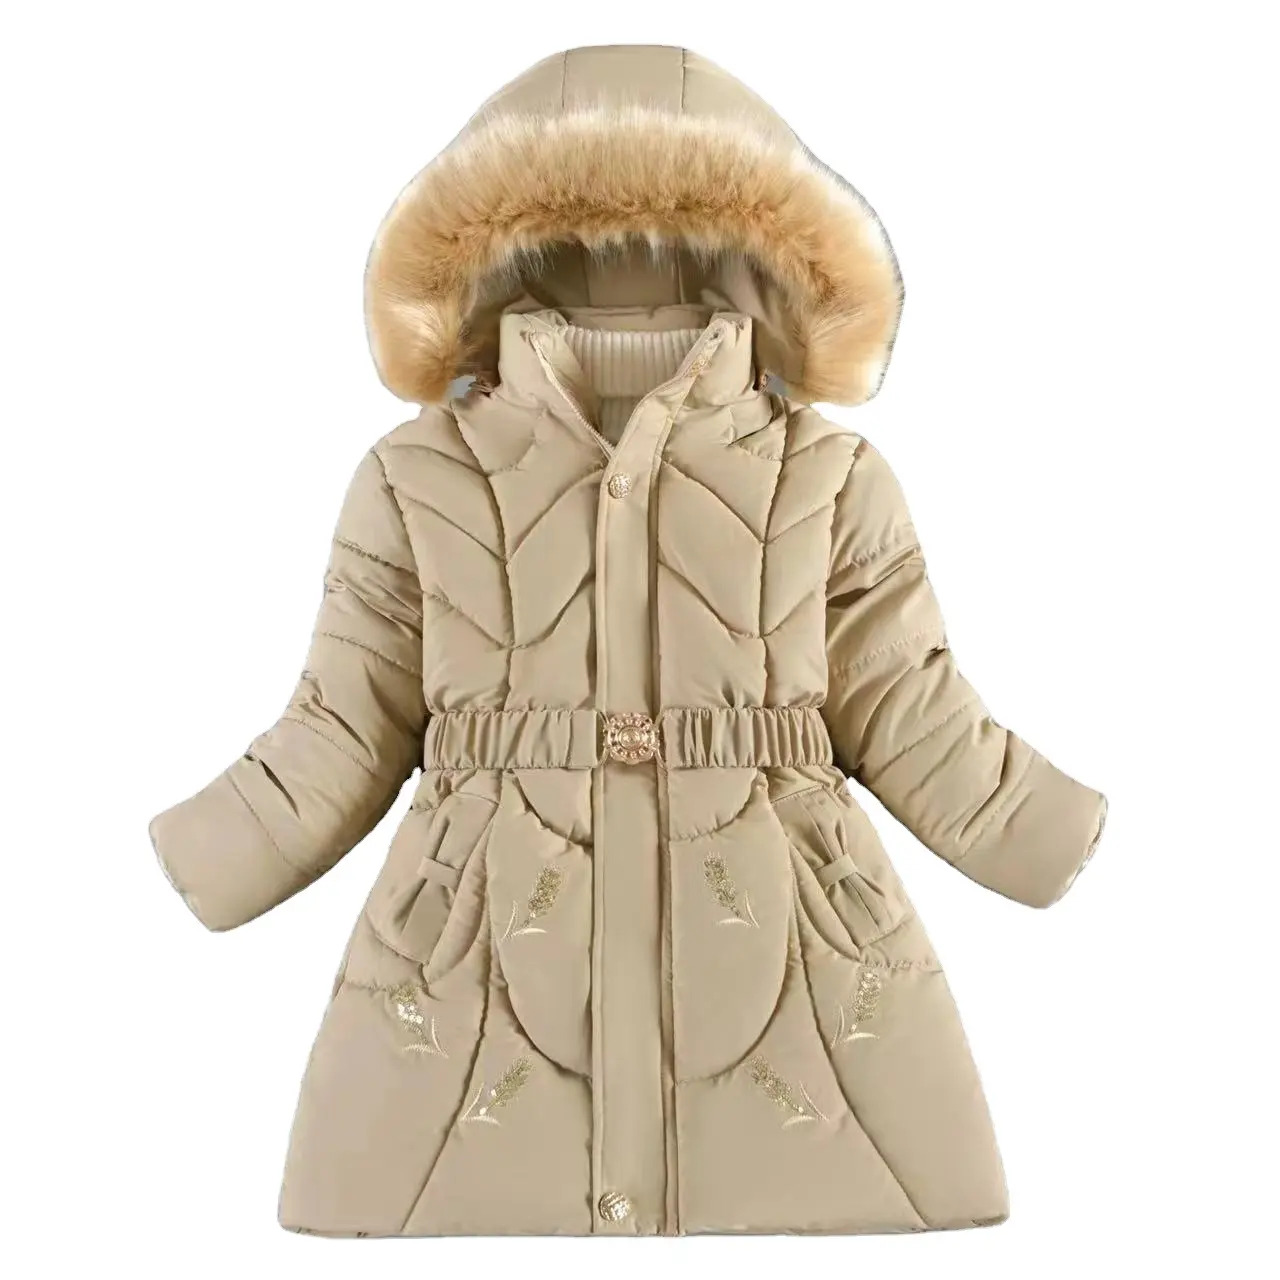 großhandel neueste designs mode winter warm halten mädchen daunenjacke teenager dicker kältebeständiger kapuzenmantel winddichter mantel